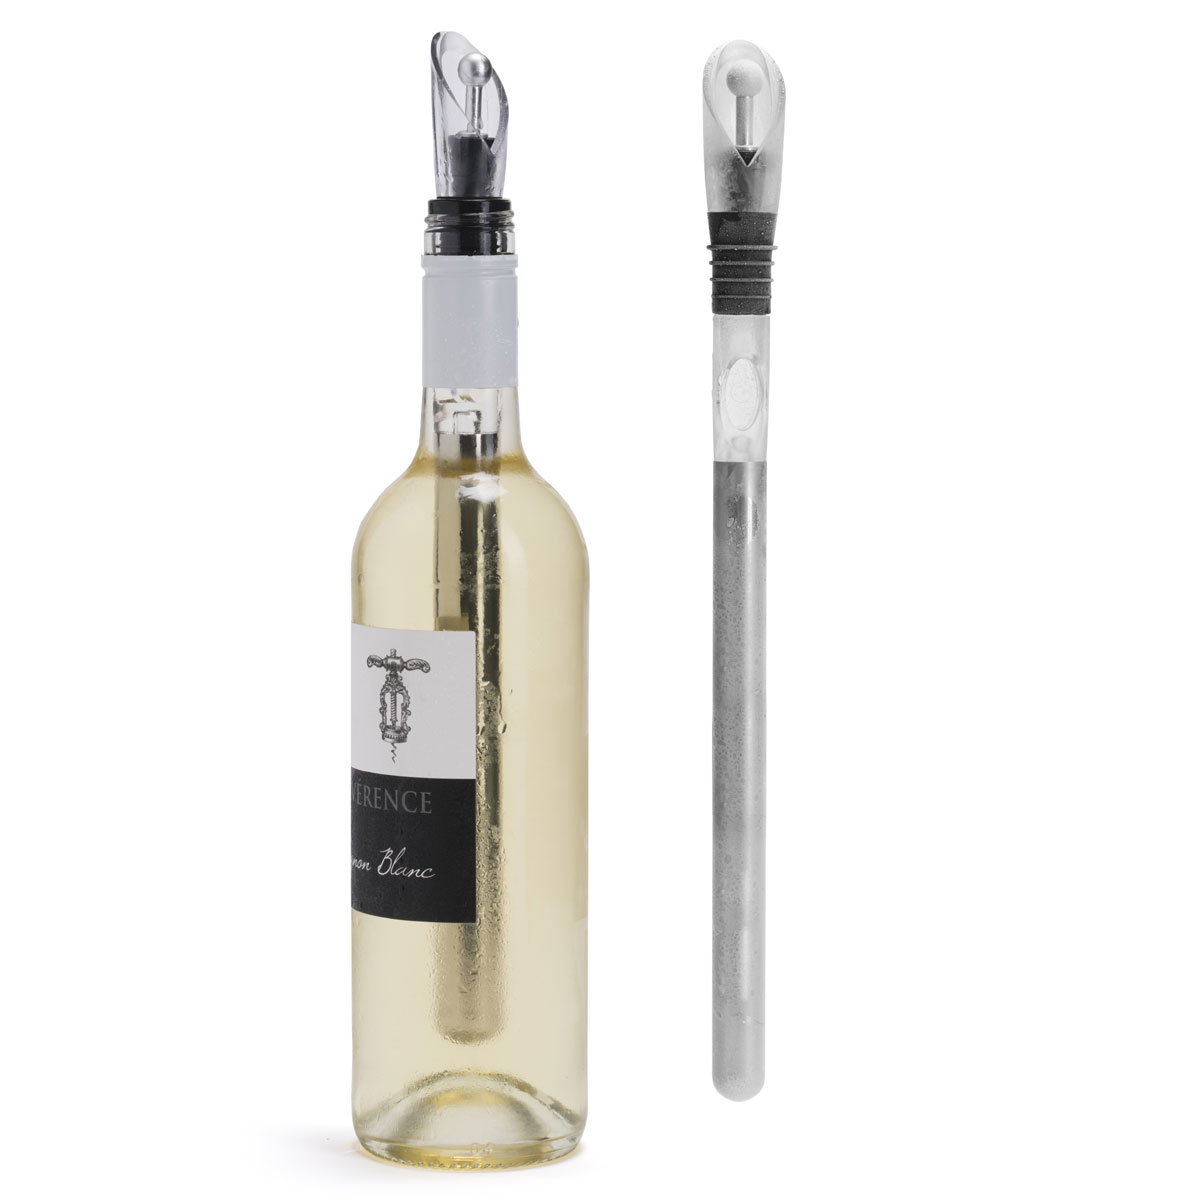 VacuVin Wine Bottle Cooler Sleeve